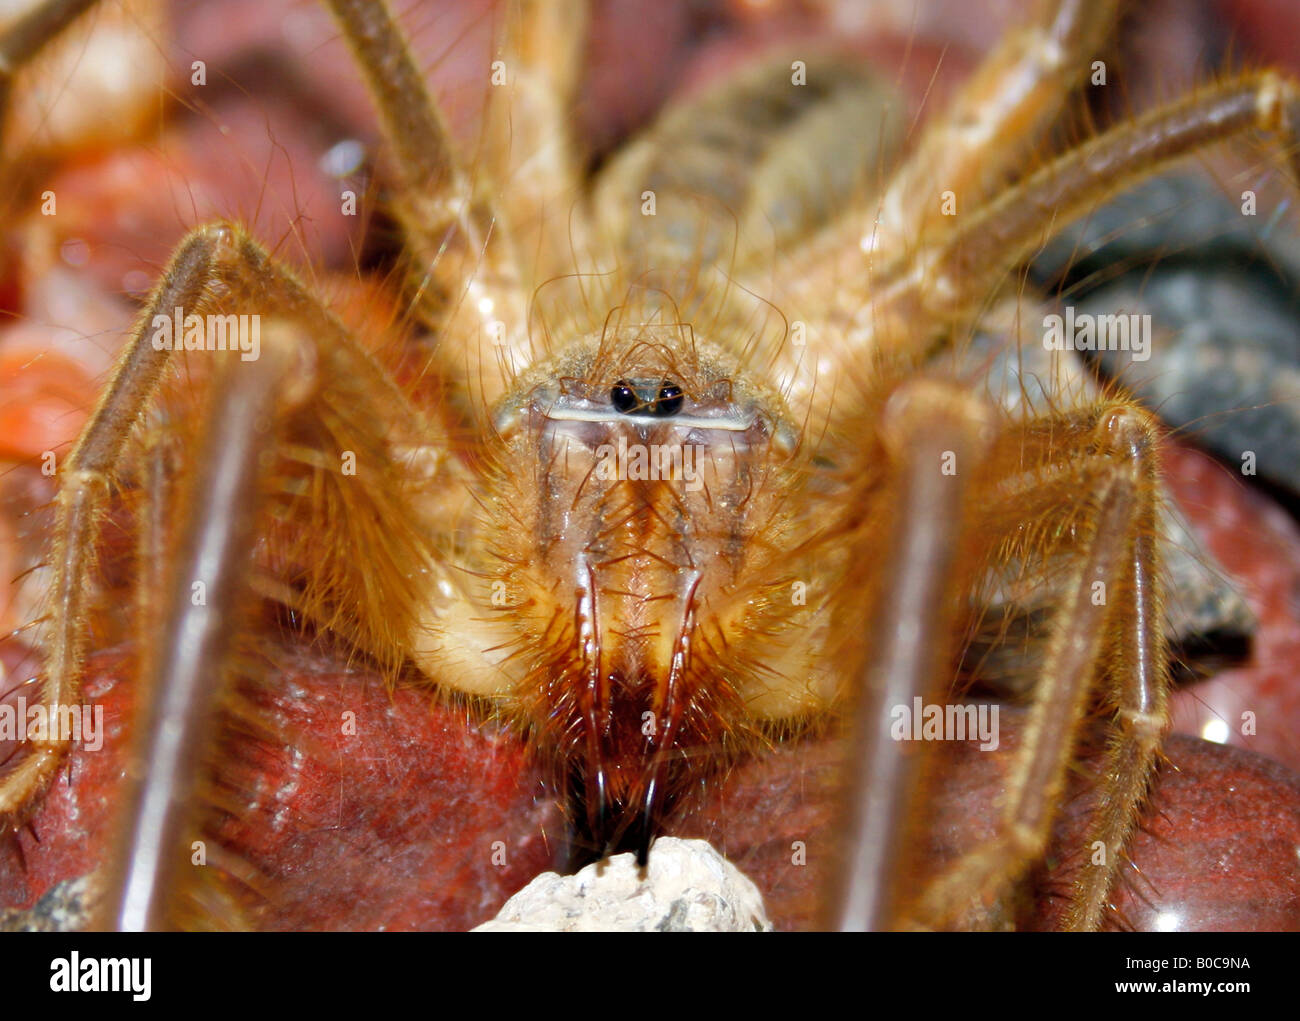 Camel Spider or Wind Scorpion in the desert of Dubai United Arab Emirates Stock Photo